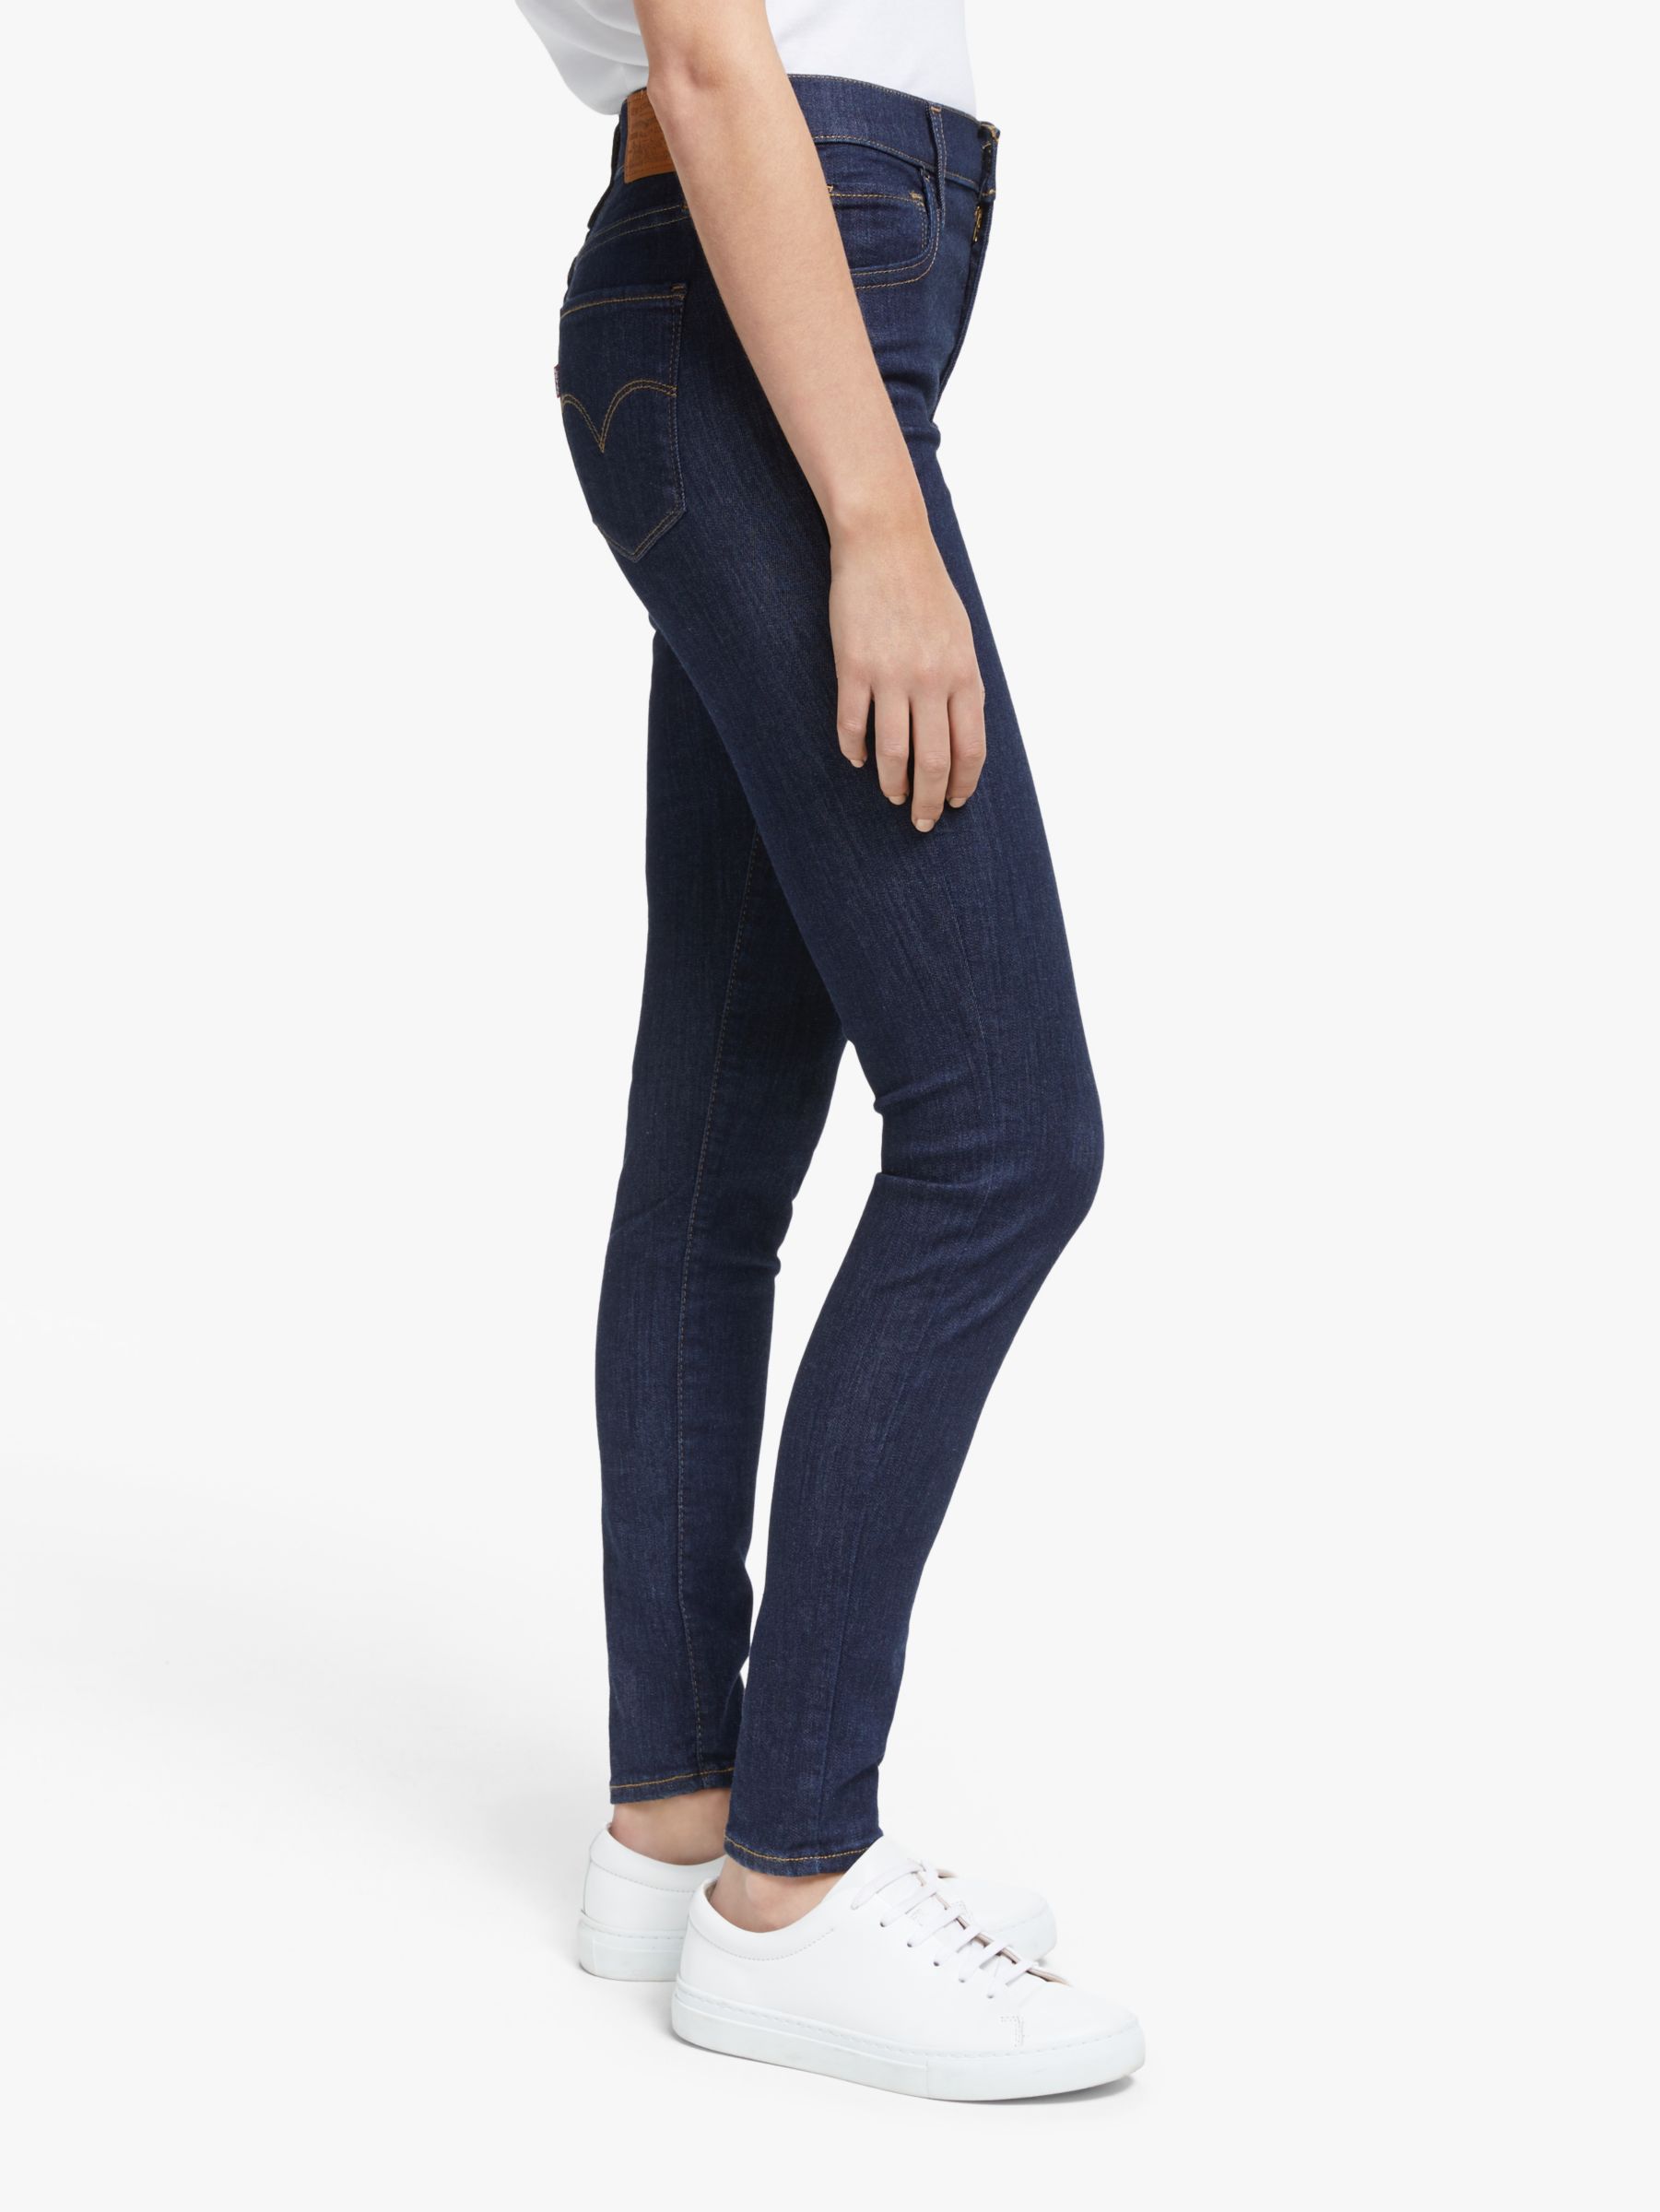 Buy Levi's 720 High Rise Super Skinny Jeans Online at johnlewis.com